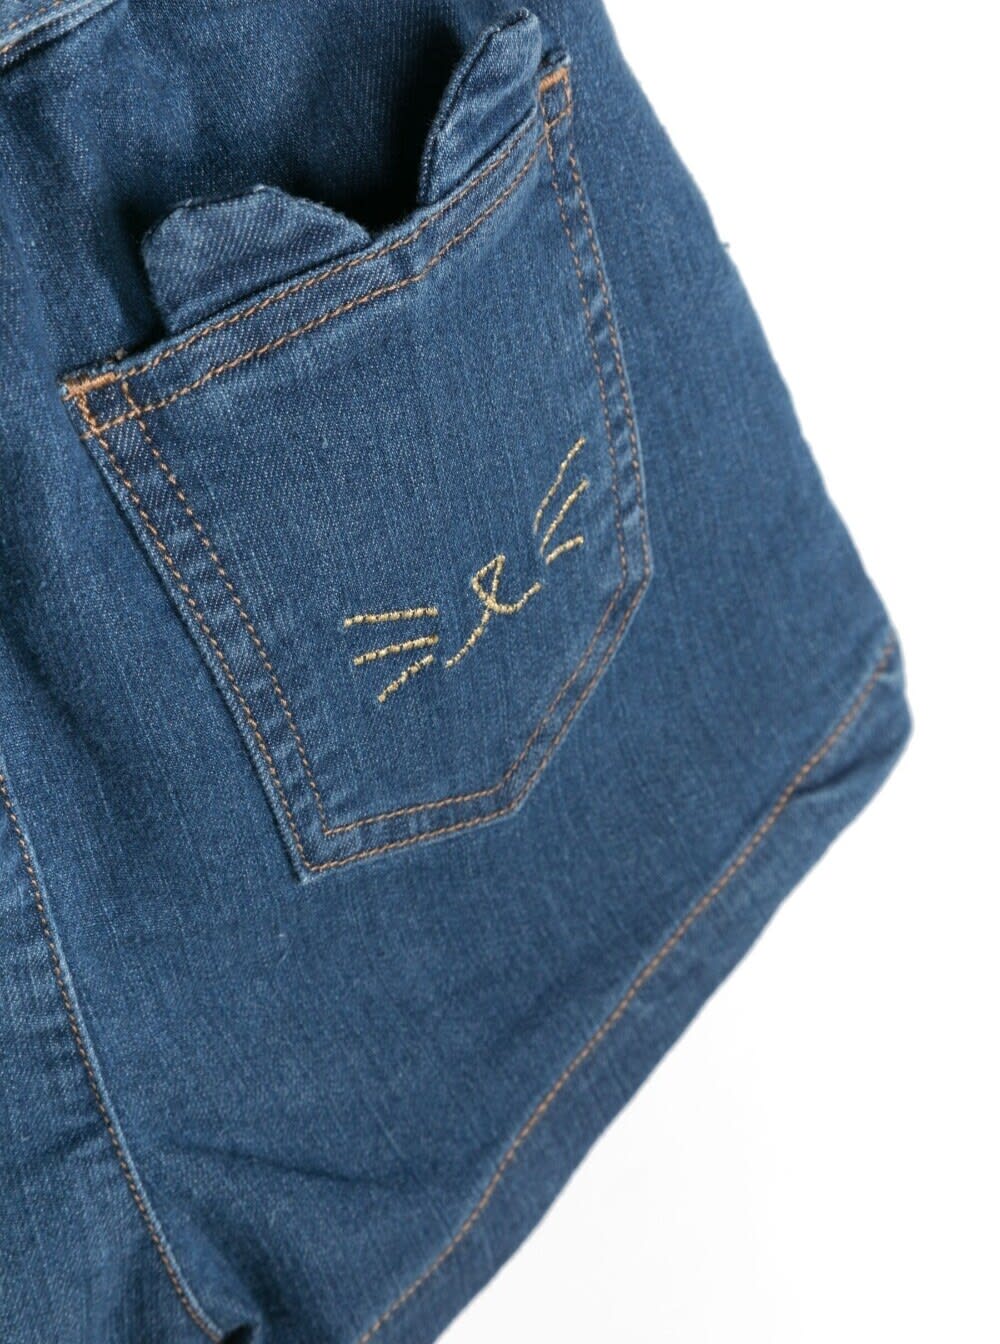 Shop Emile Et Ida Blue Shorts With Matching Belt In Stretch Cotton Denim Girl